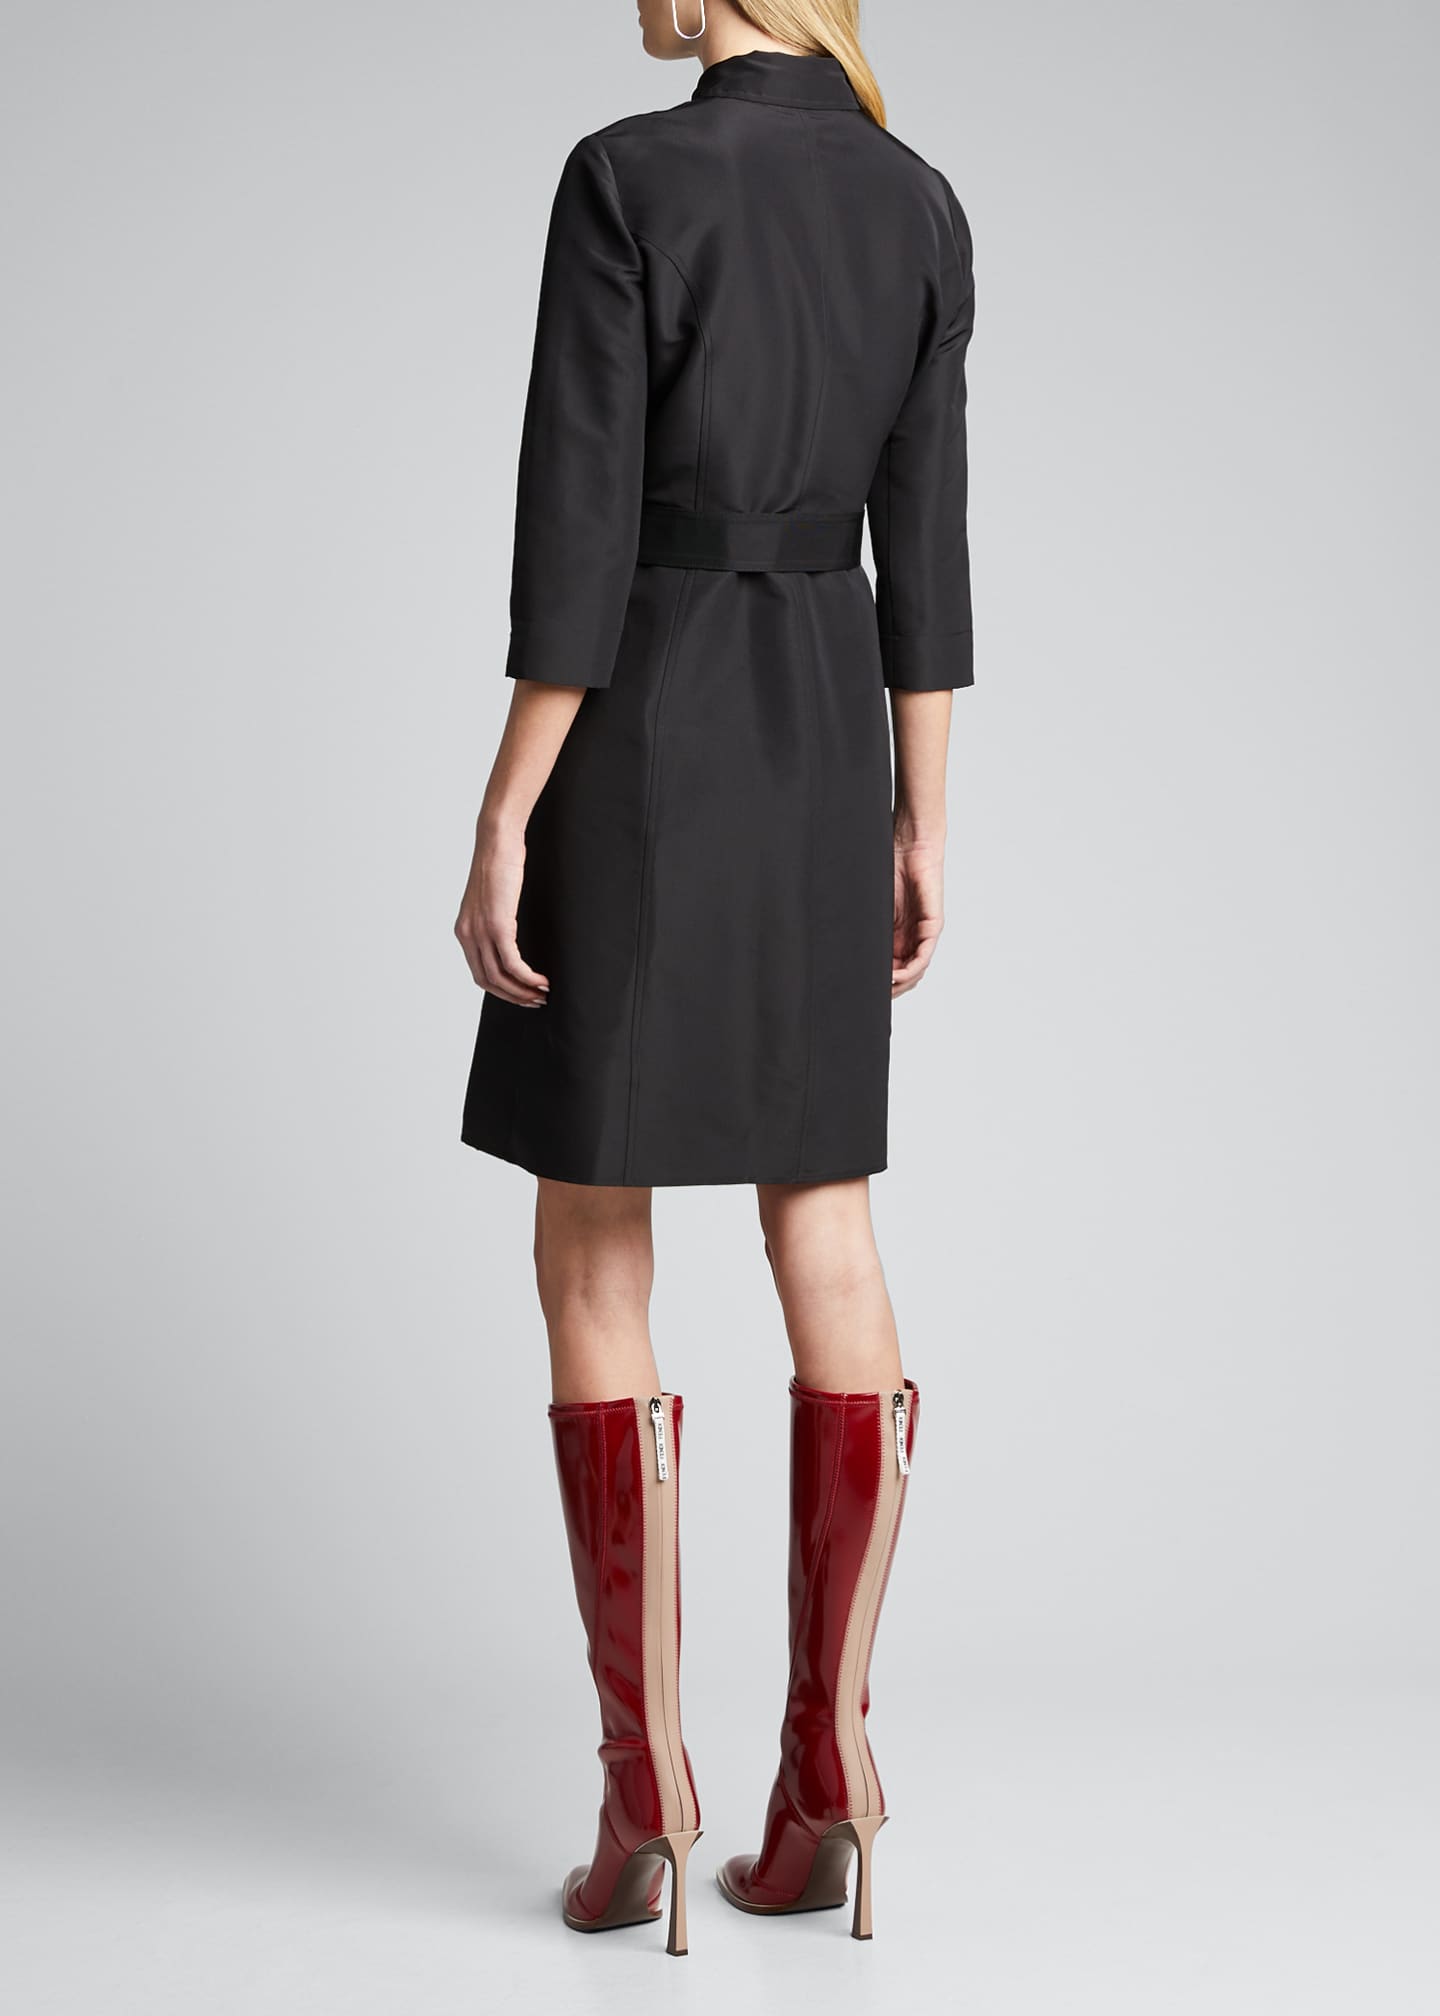 Carolina Herrera Faille 3/4-Sleeve Shirtdress - Bergdorf Goodman